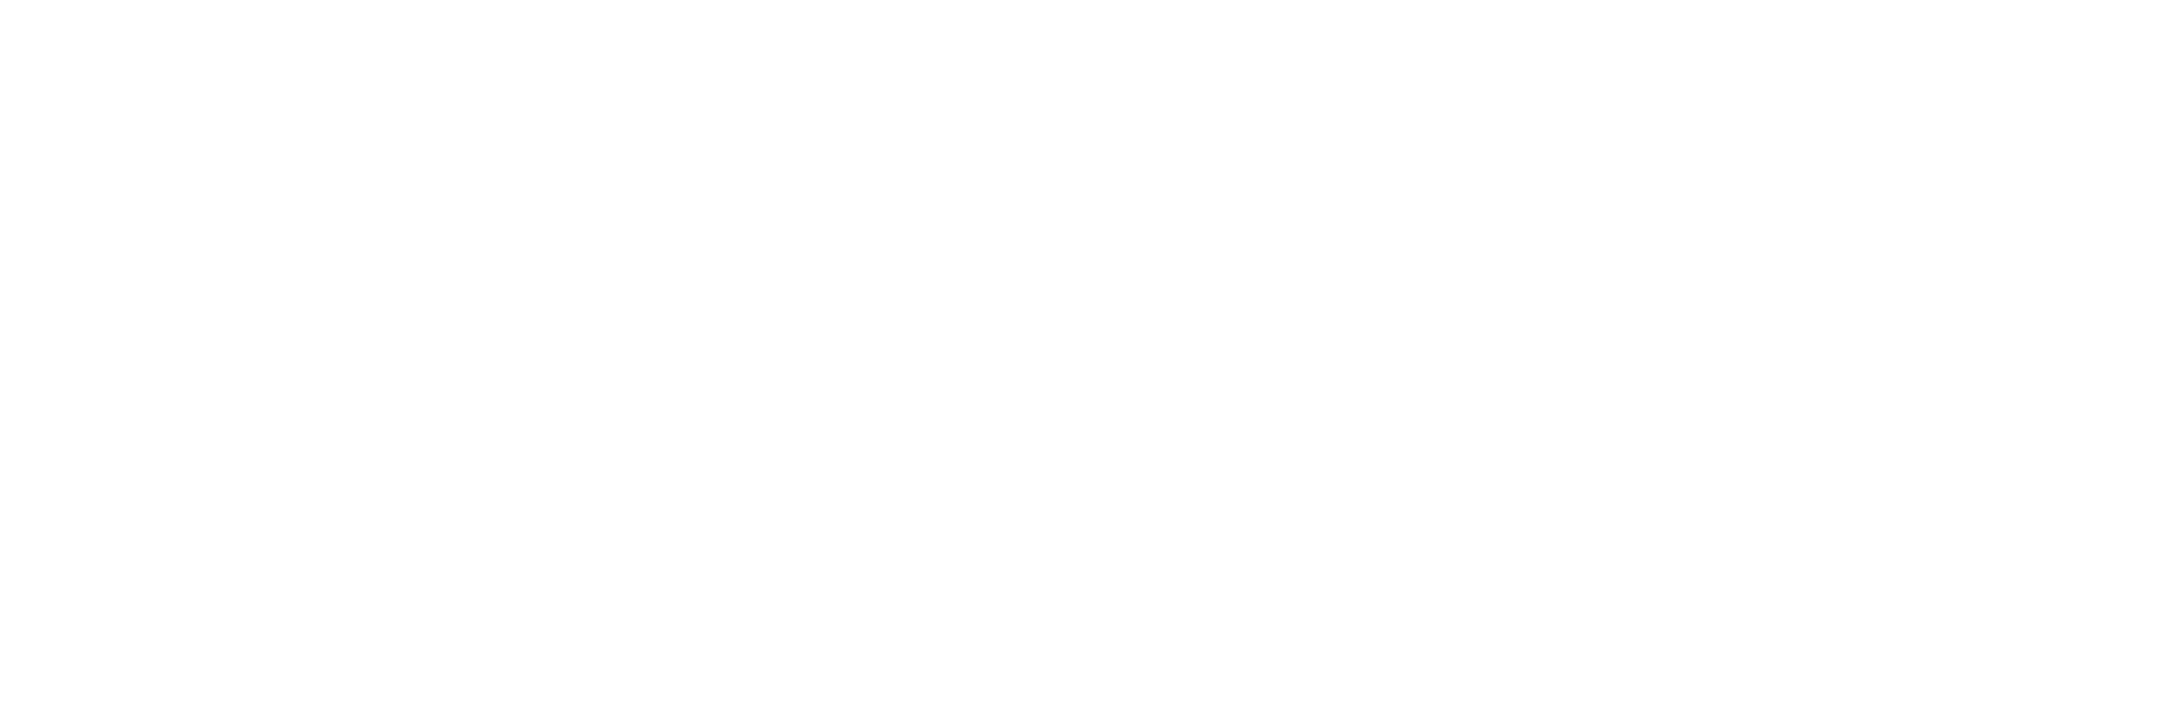 google-white-logo-1.png